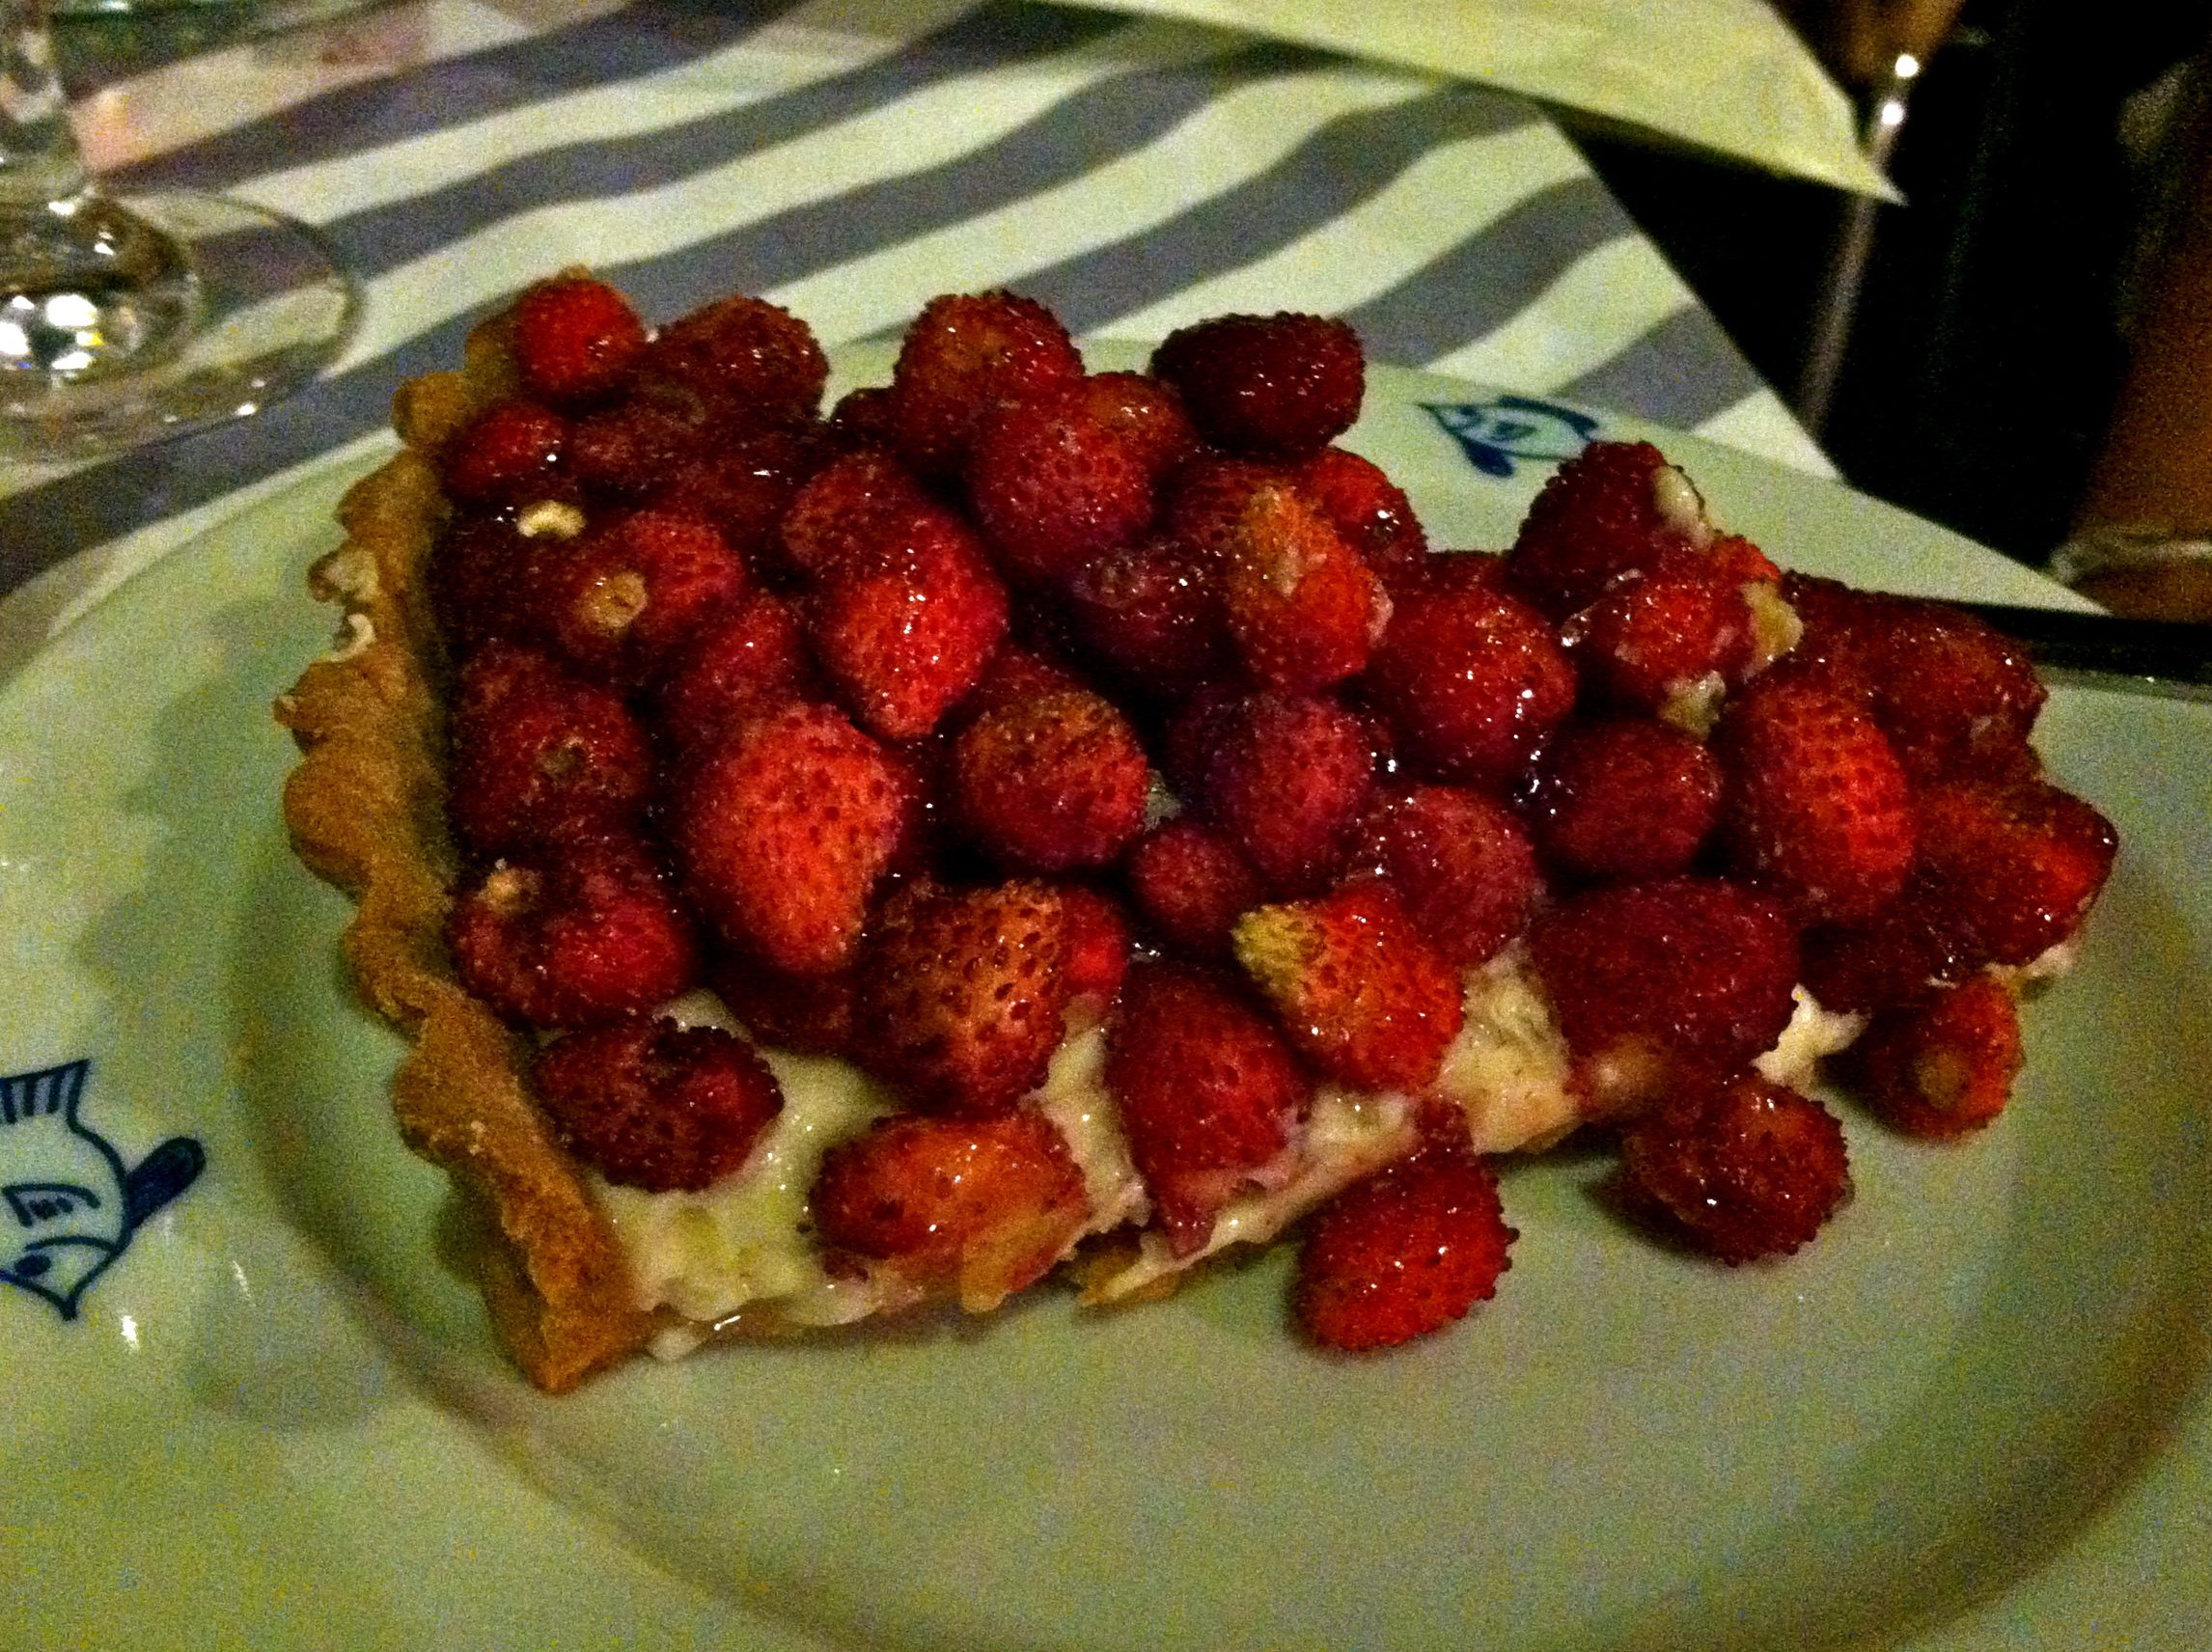 My friend Roxy got this amazing crostata di fragola (strawberry crostata). It was so pretty!